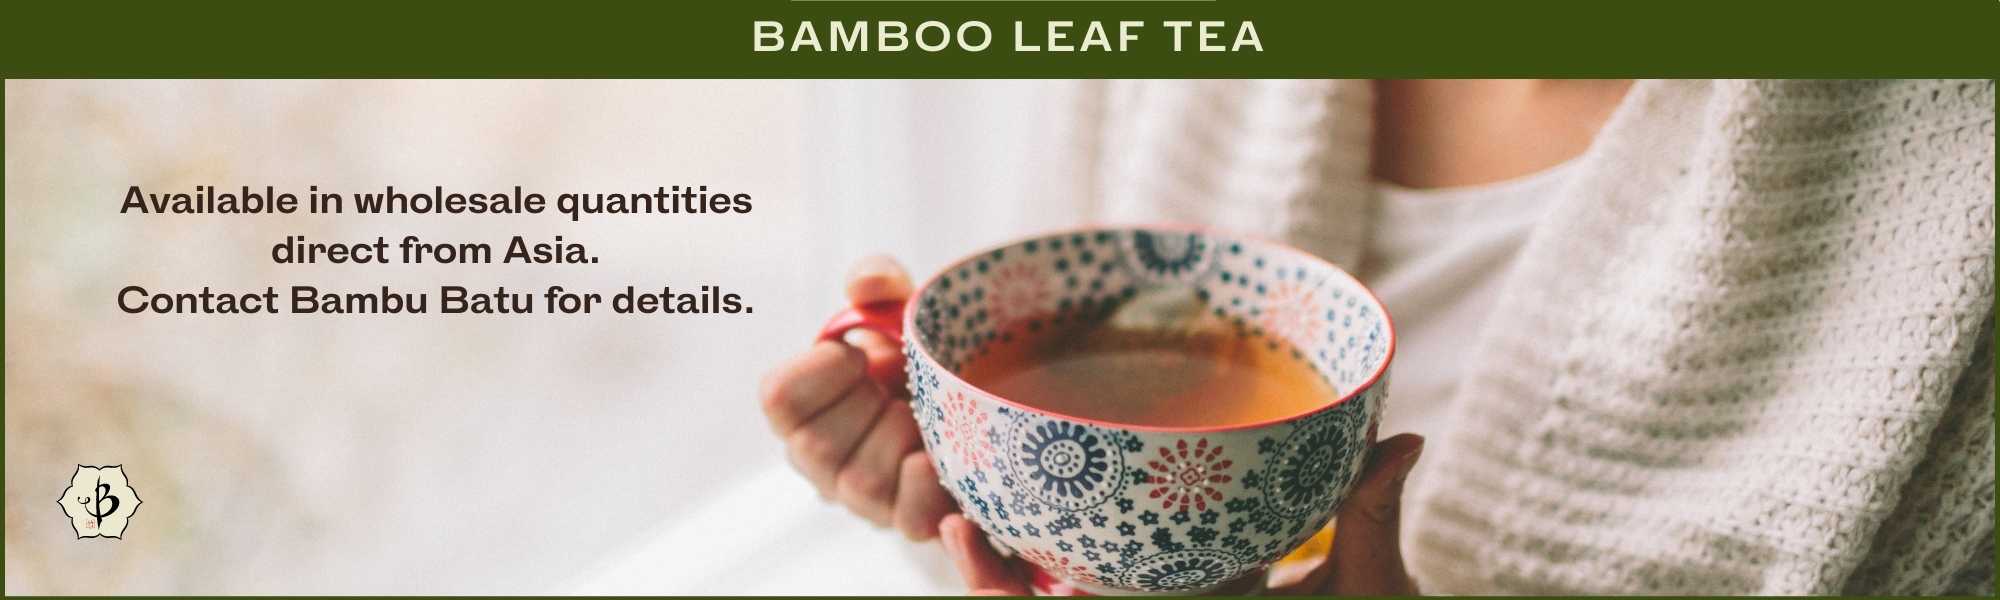 Bamboo leaf tea banner